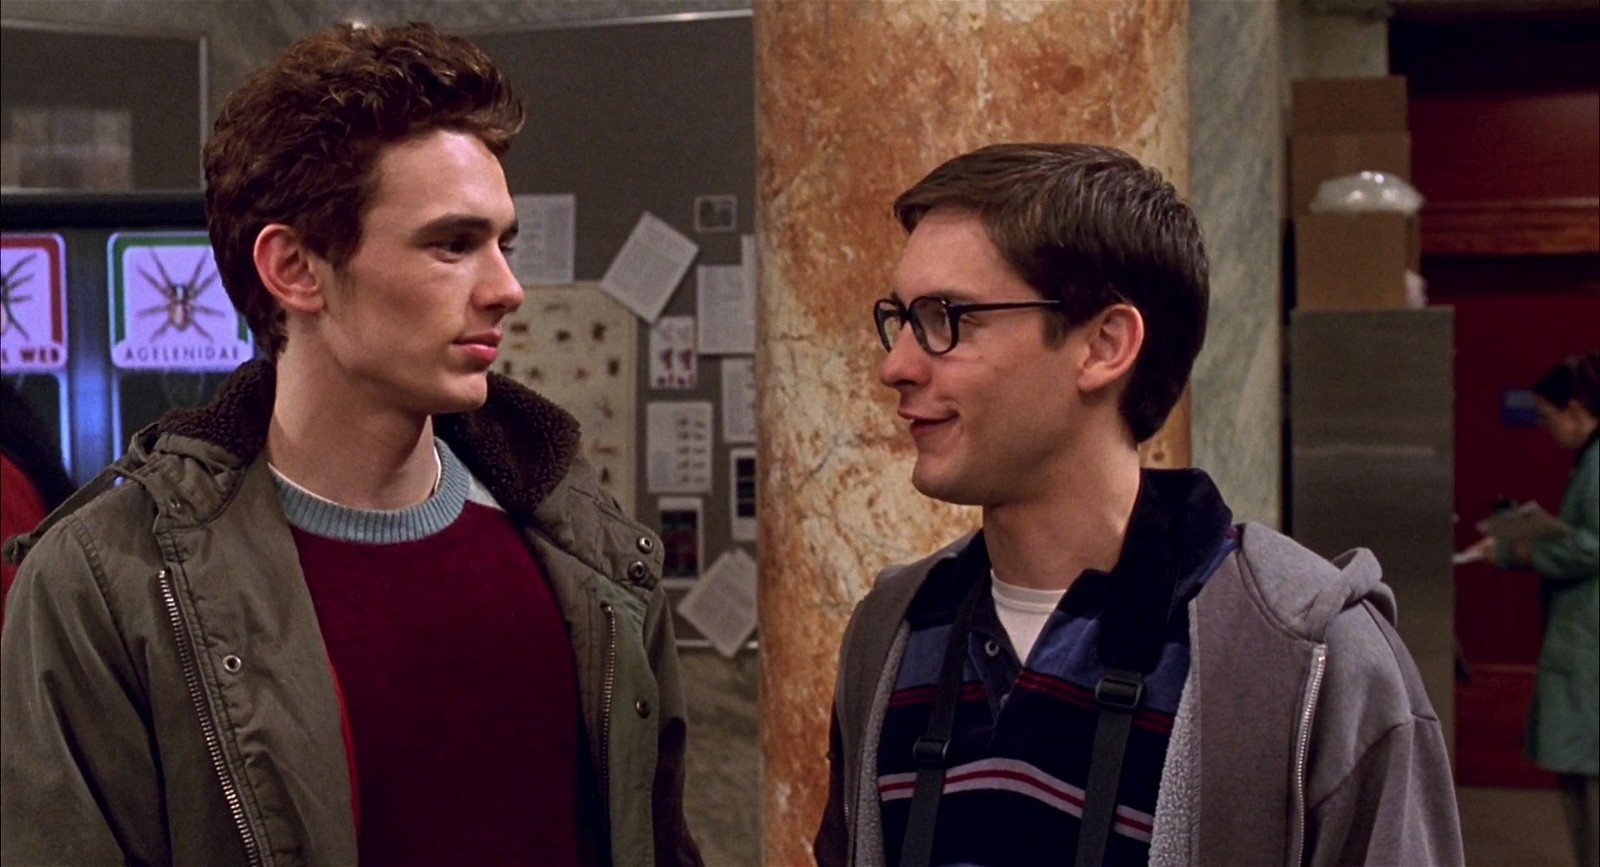 James Franco as Harry Osborn alongside Tobey Maguire's Peter Parker